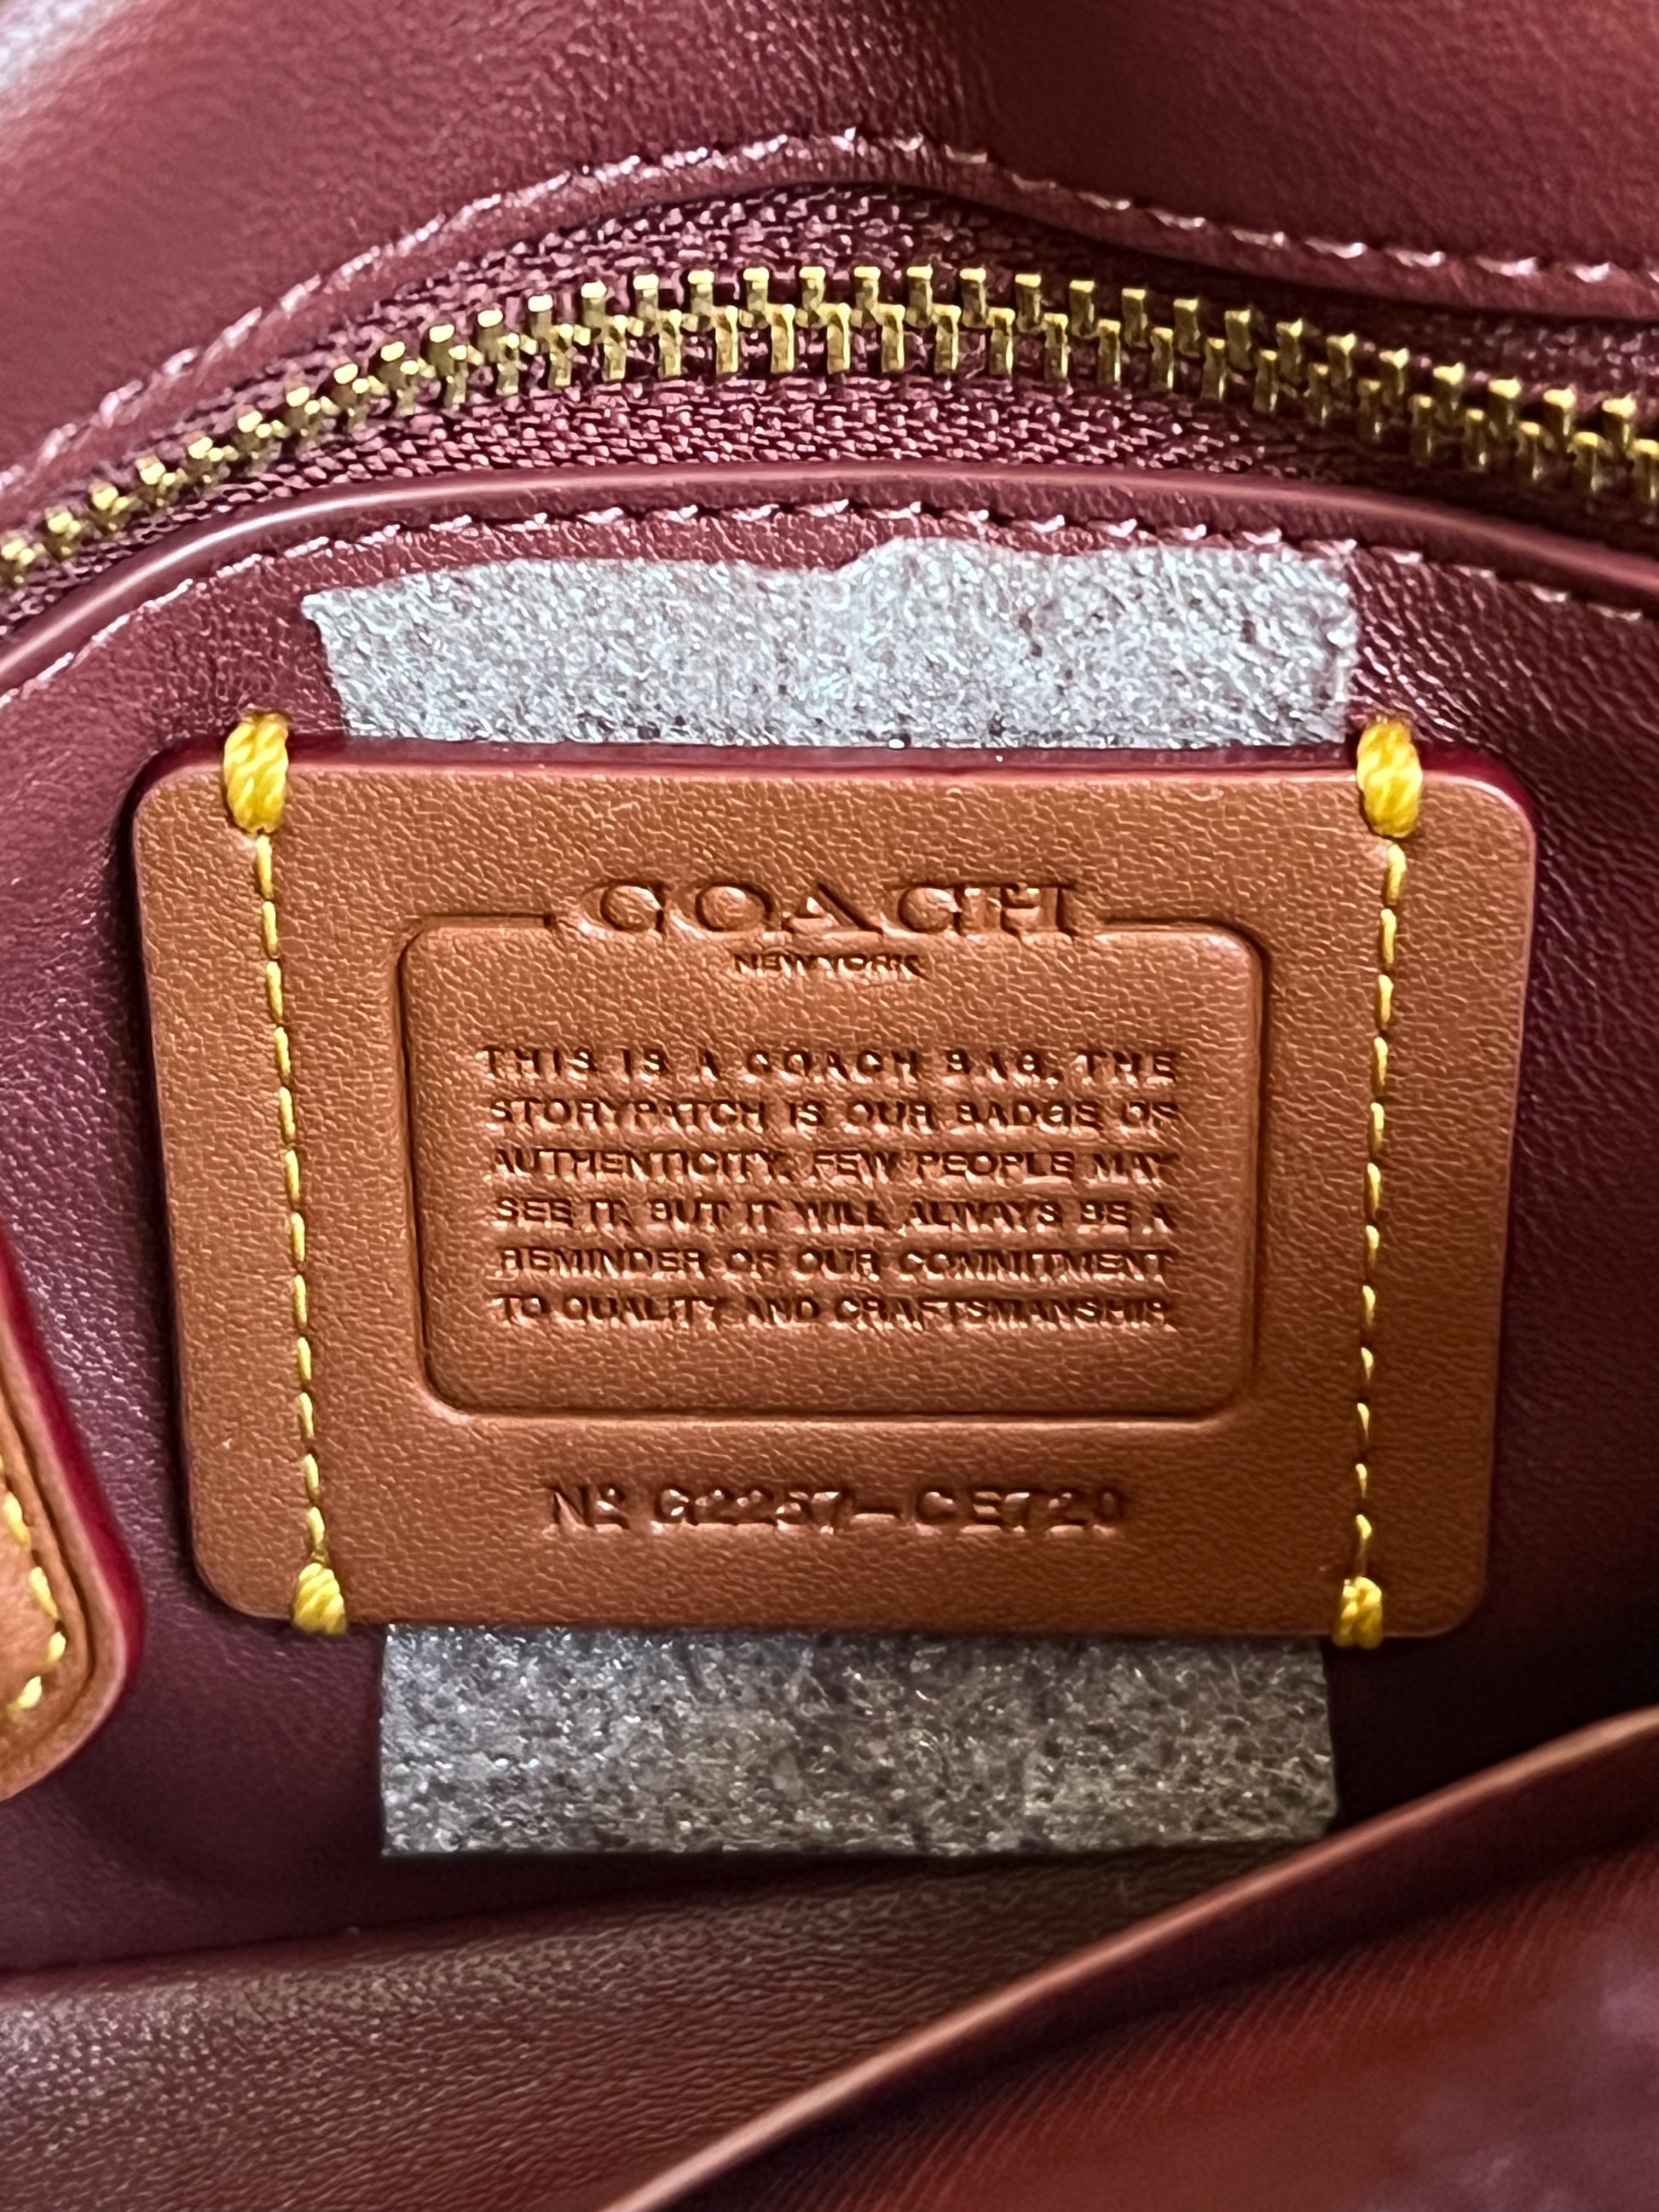 COACH 'pillow Madison 18' Shoulder Bag in Orange